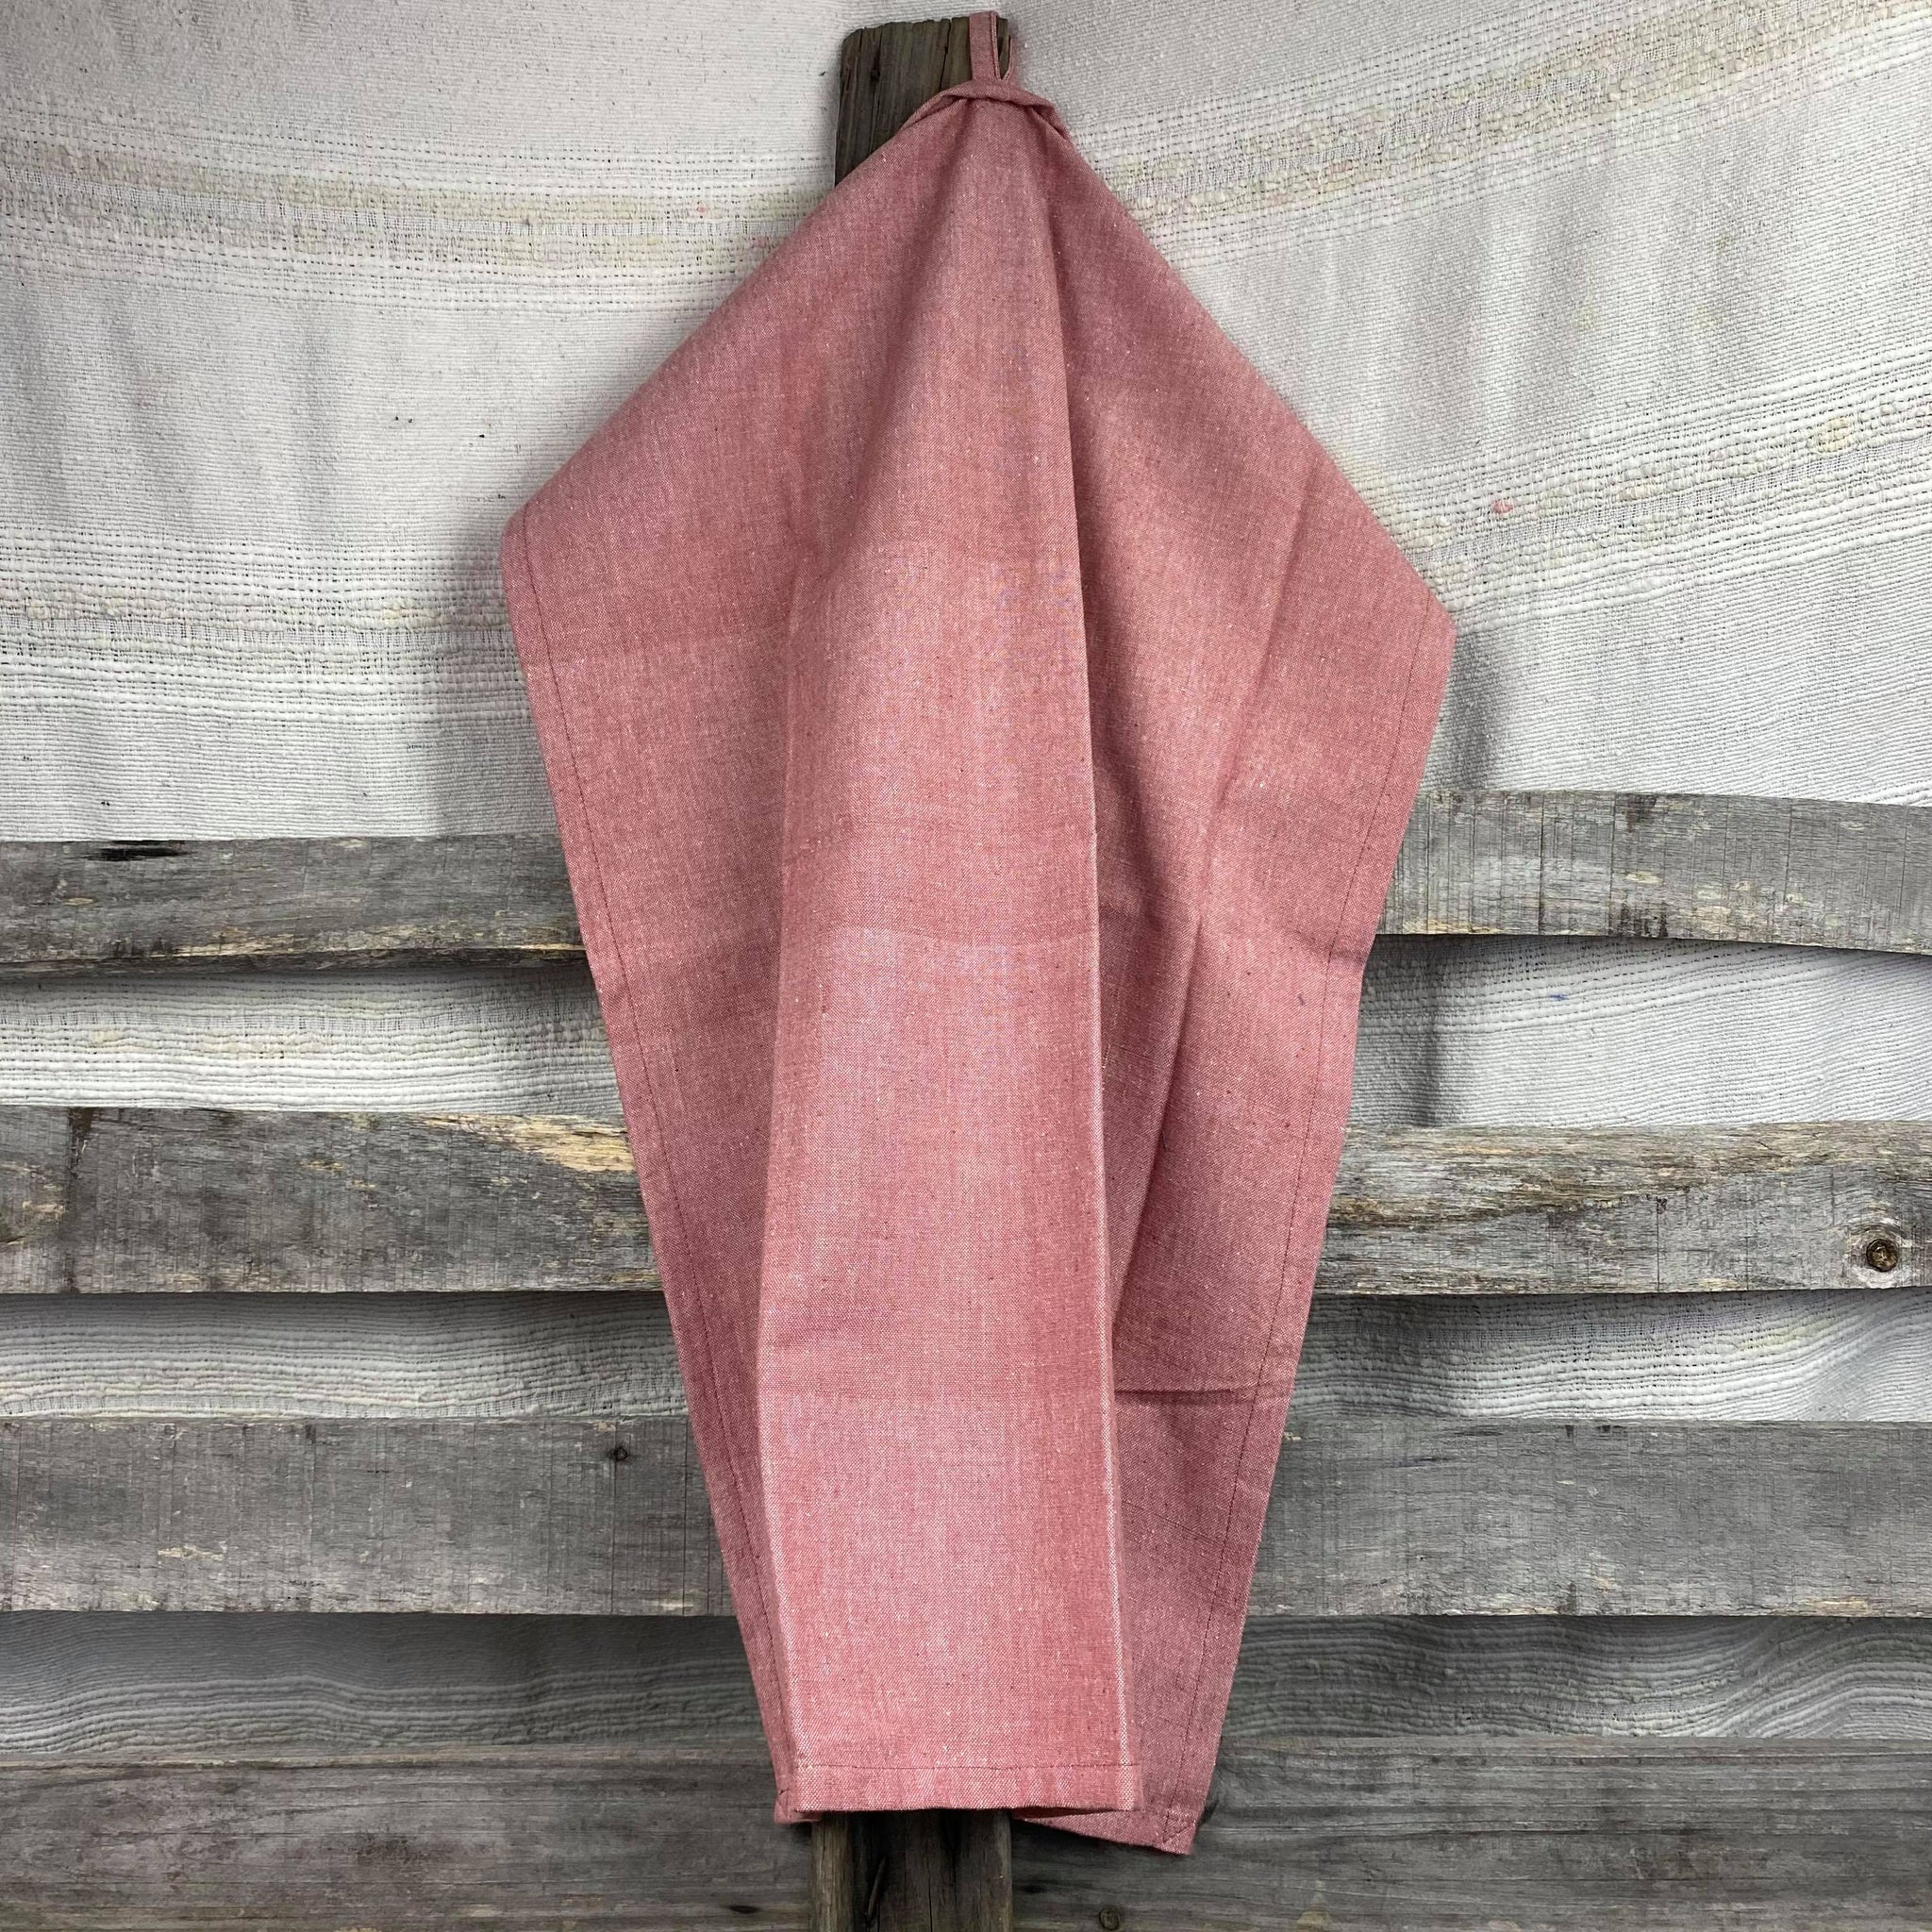 Fair Trade Handwoven Cotton Plain Tea Towels